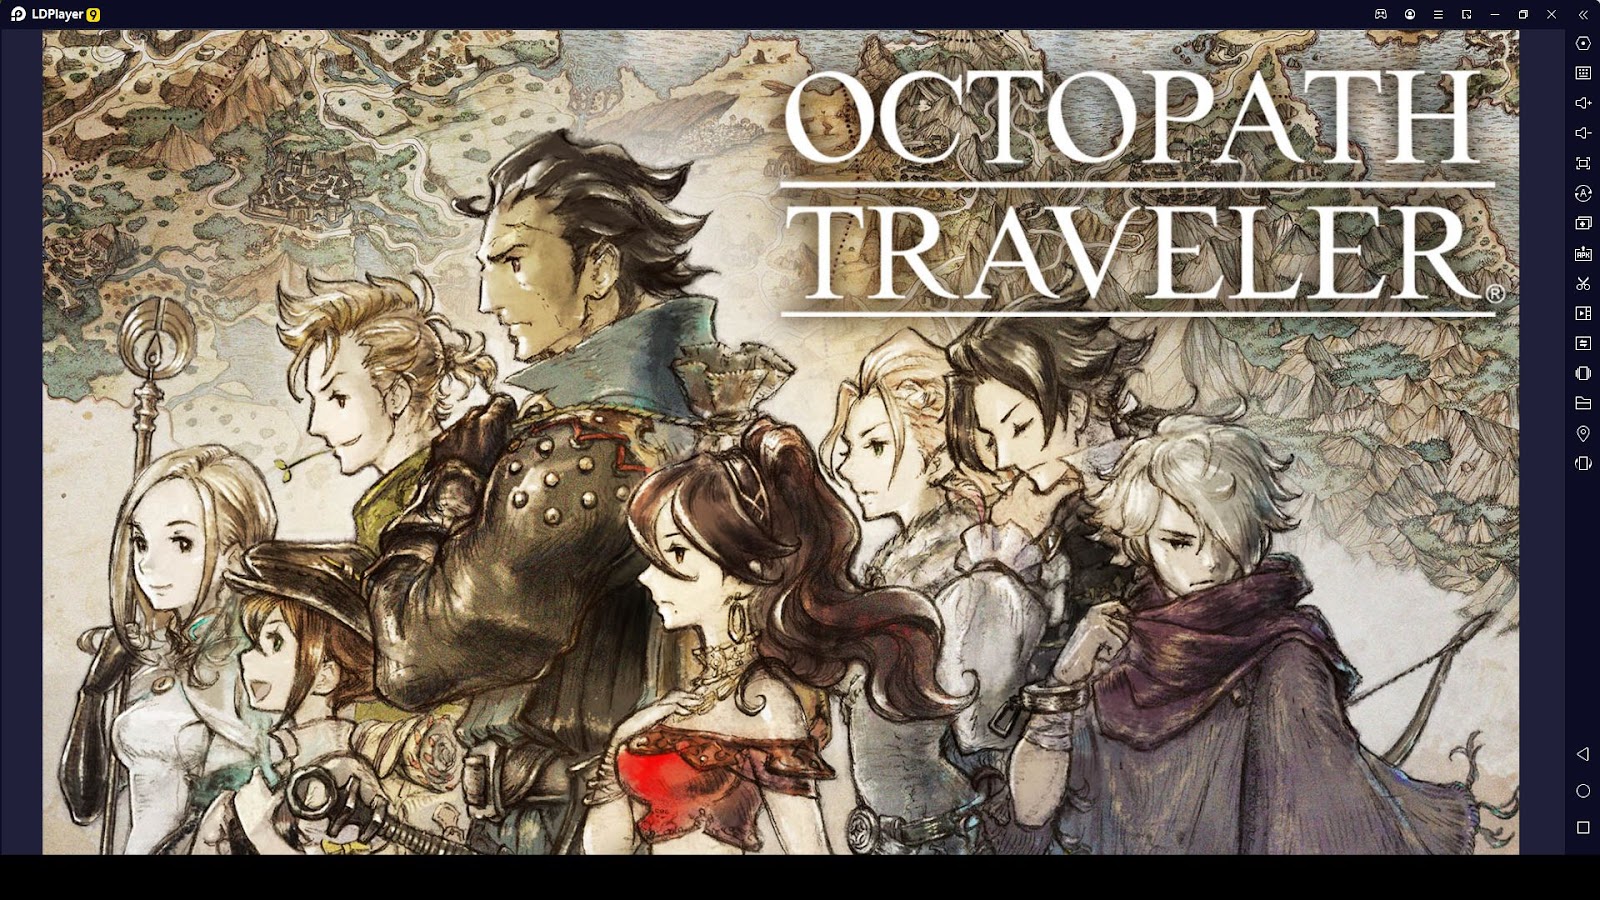 Fresh Take - An Octopath Traveler: CotC Review